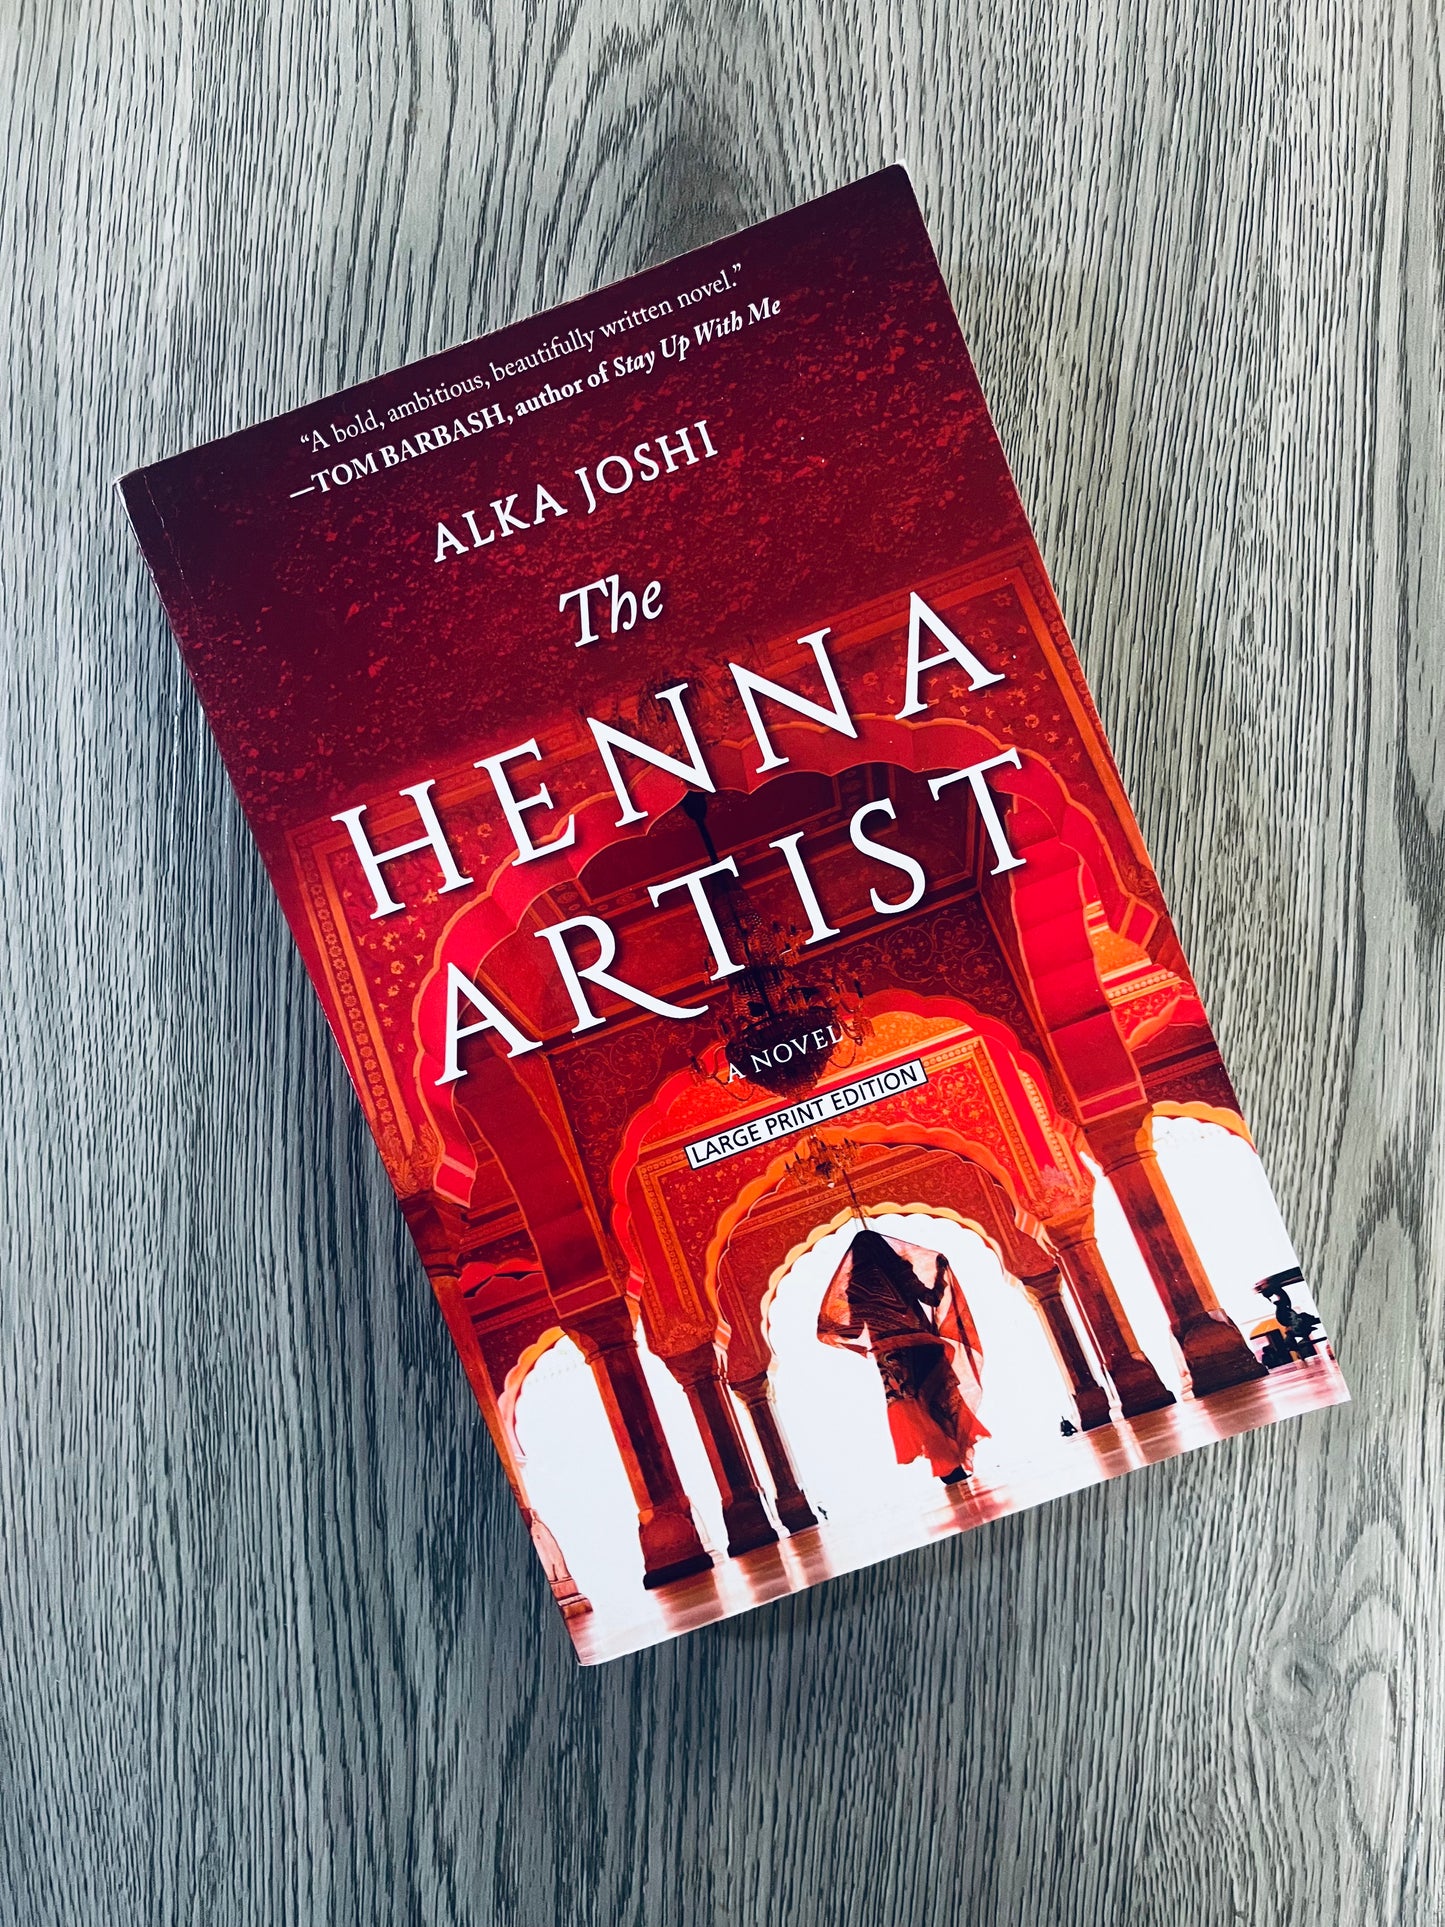 The Henna Artist  (The Jaipur Trilogy #1) by Alka Joshi